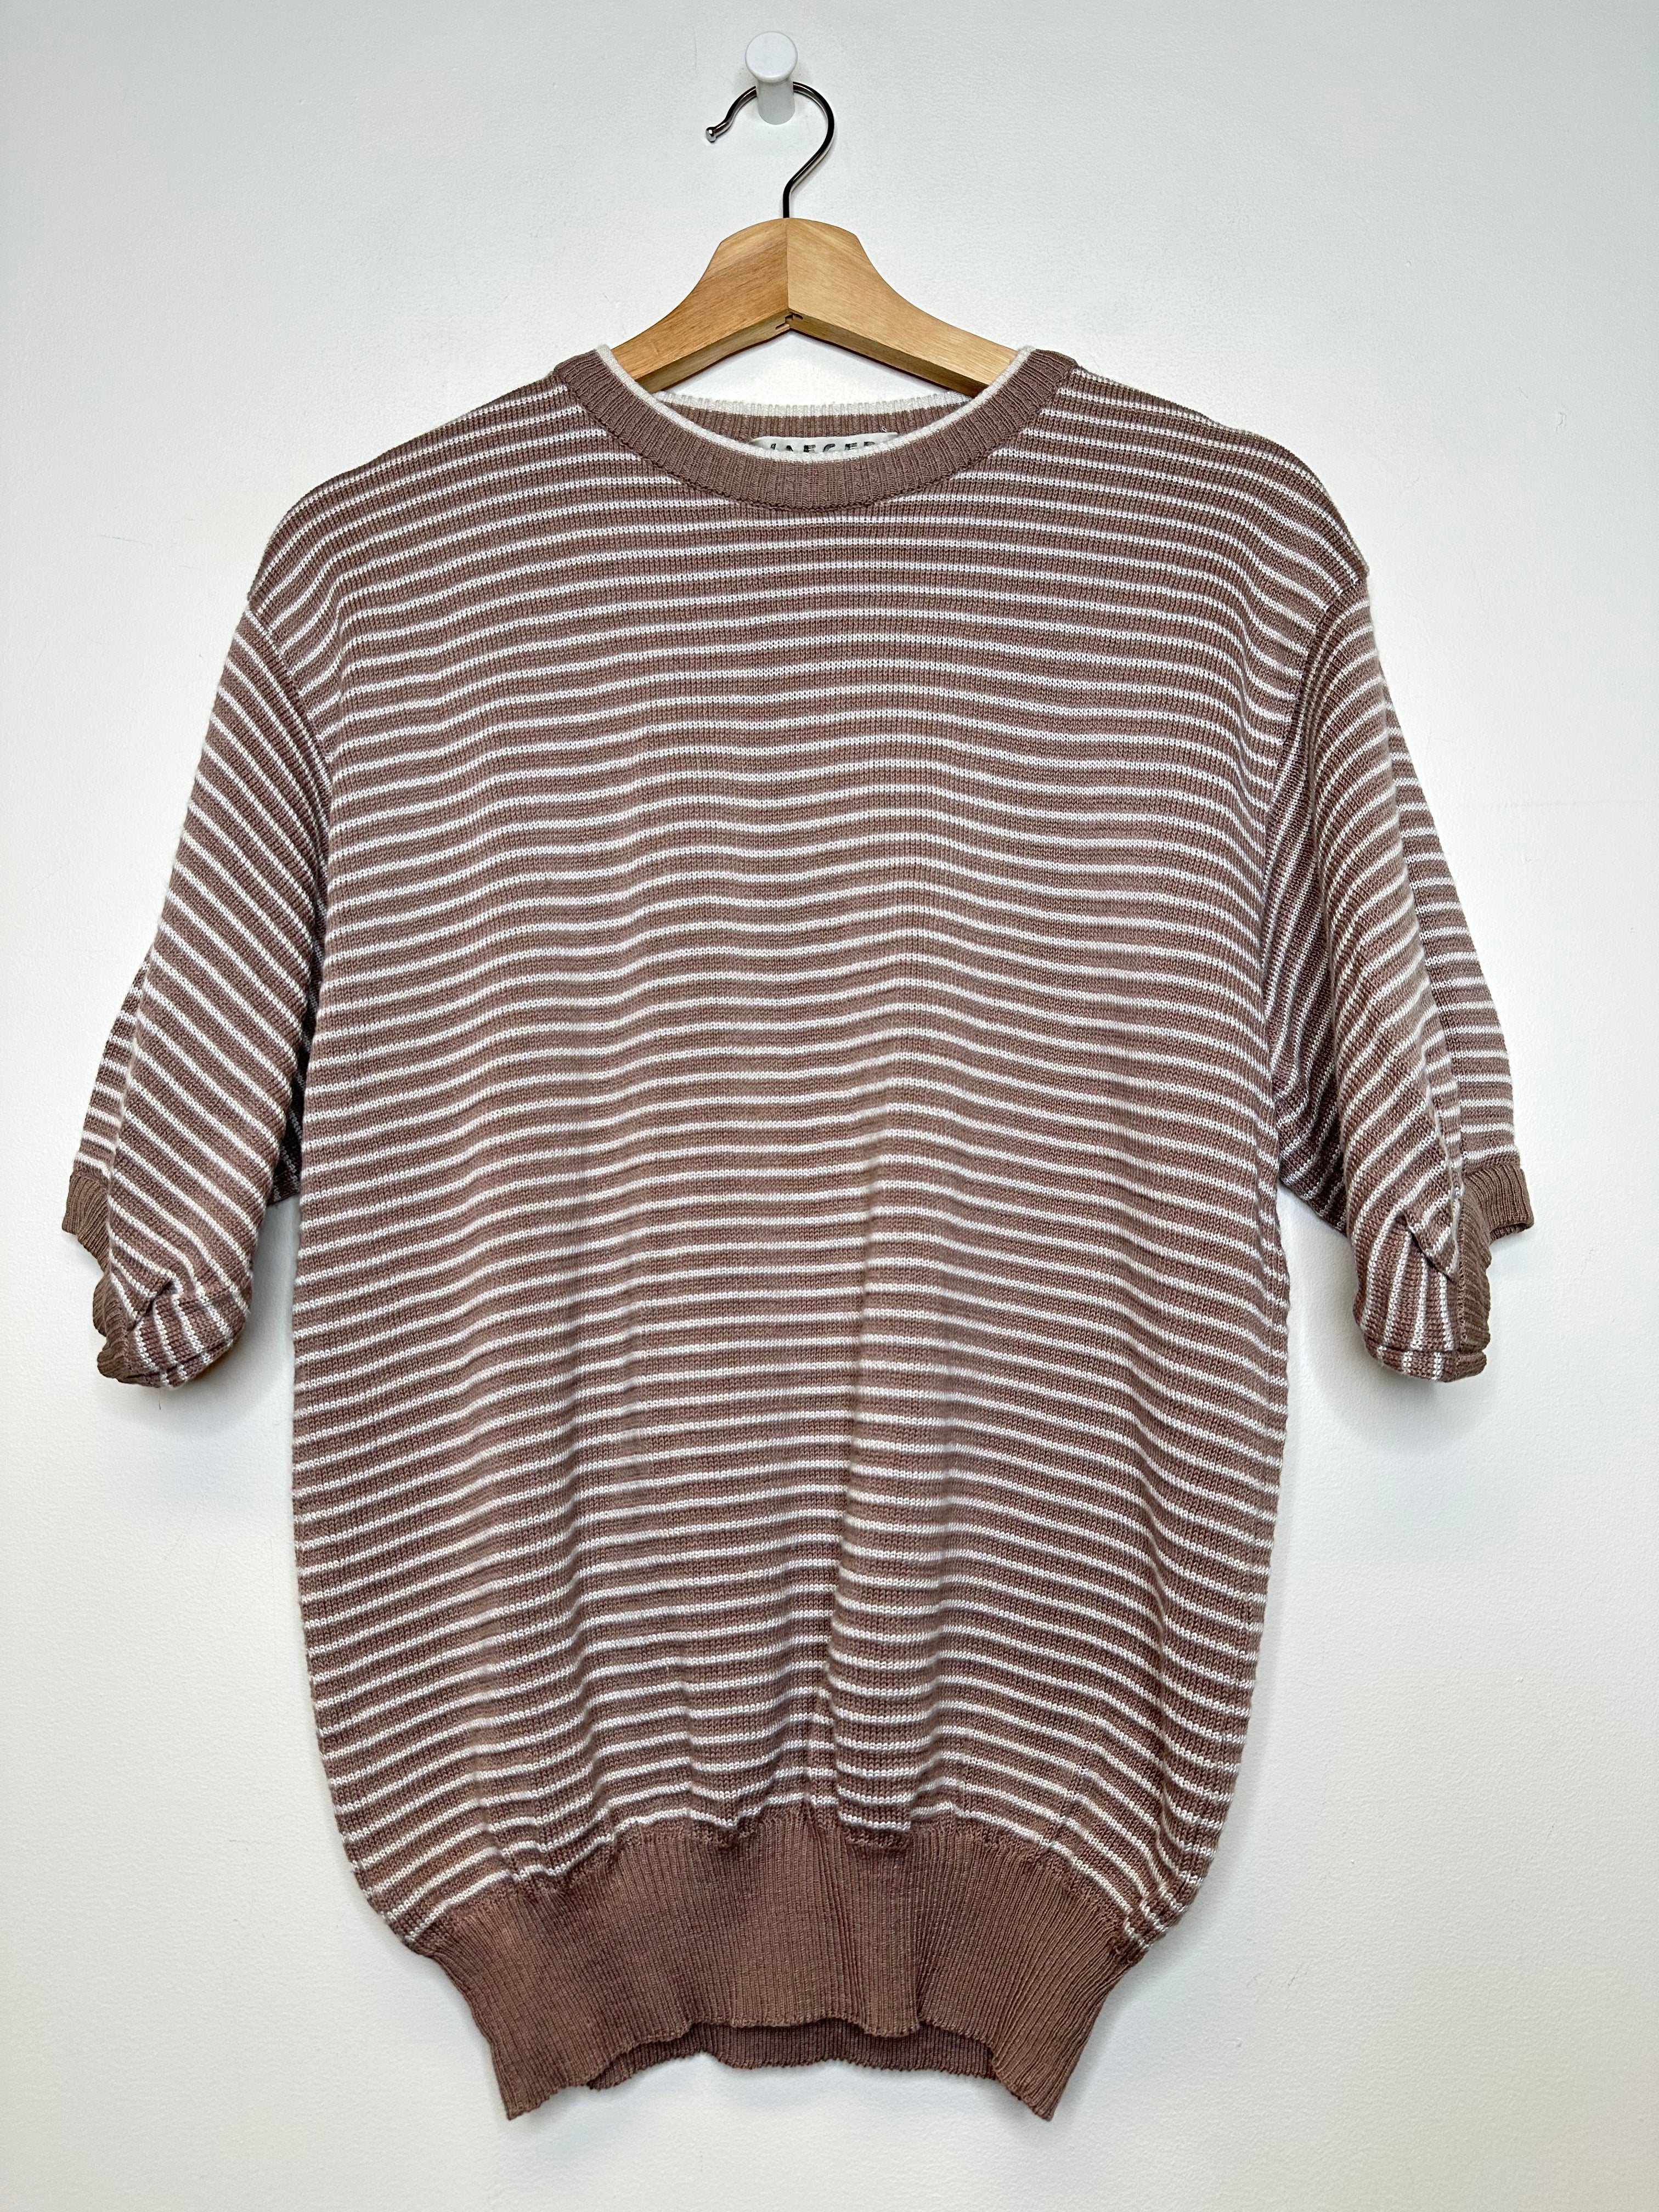 Vintage Brown Striped Short Sleeve Sweater - L